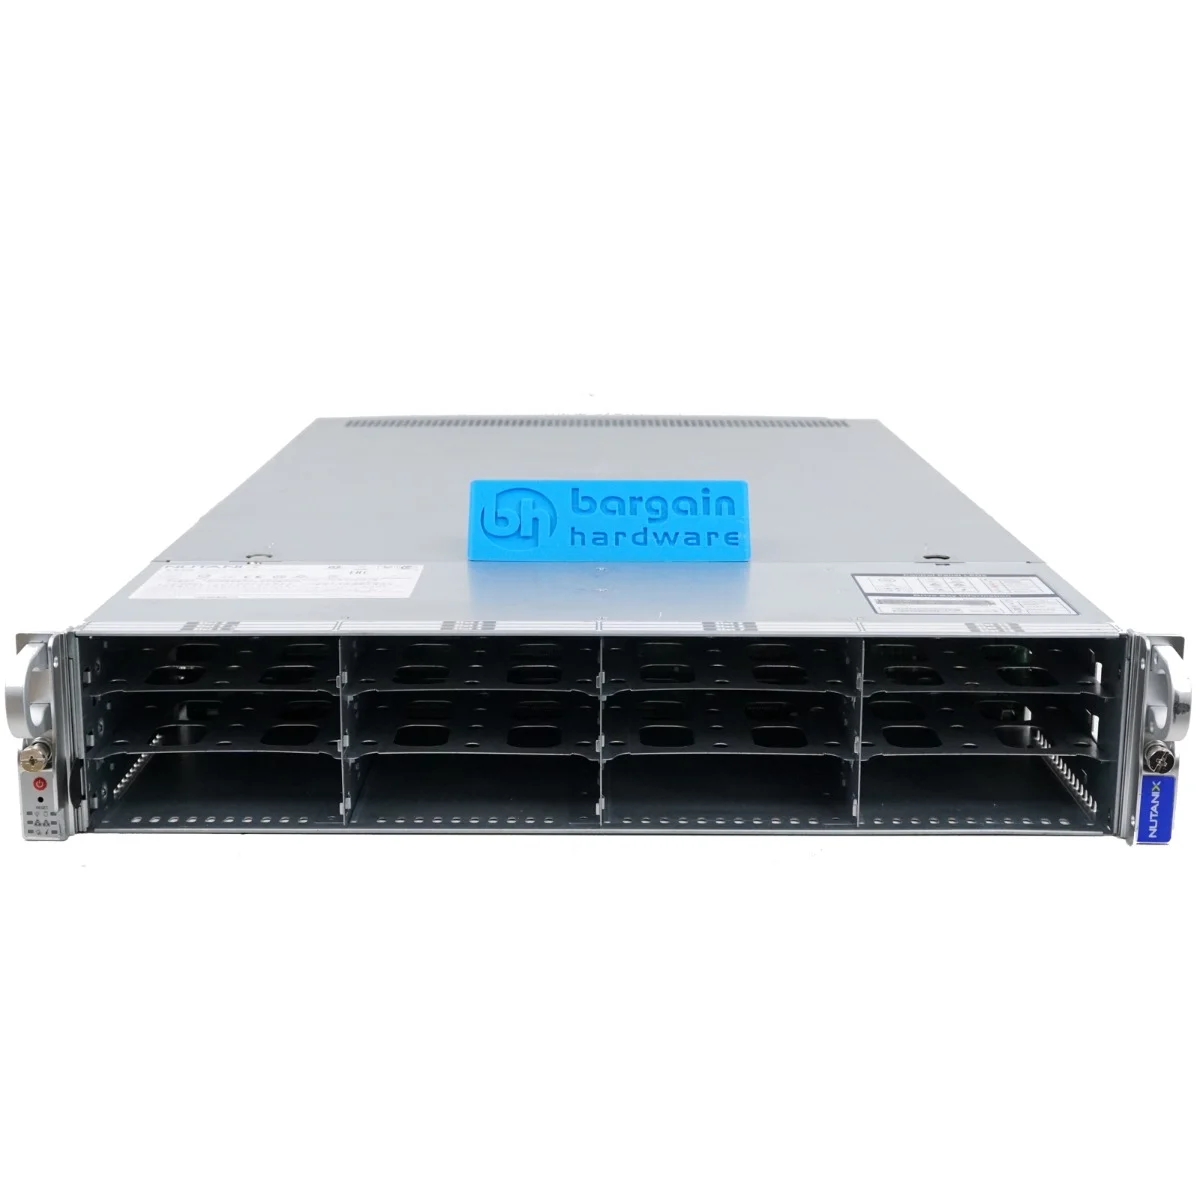 SuperMicro CSE-829U X11DPU 2U Rack Server